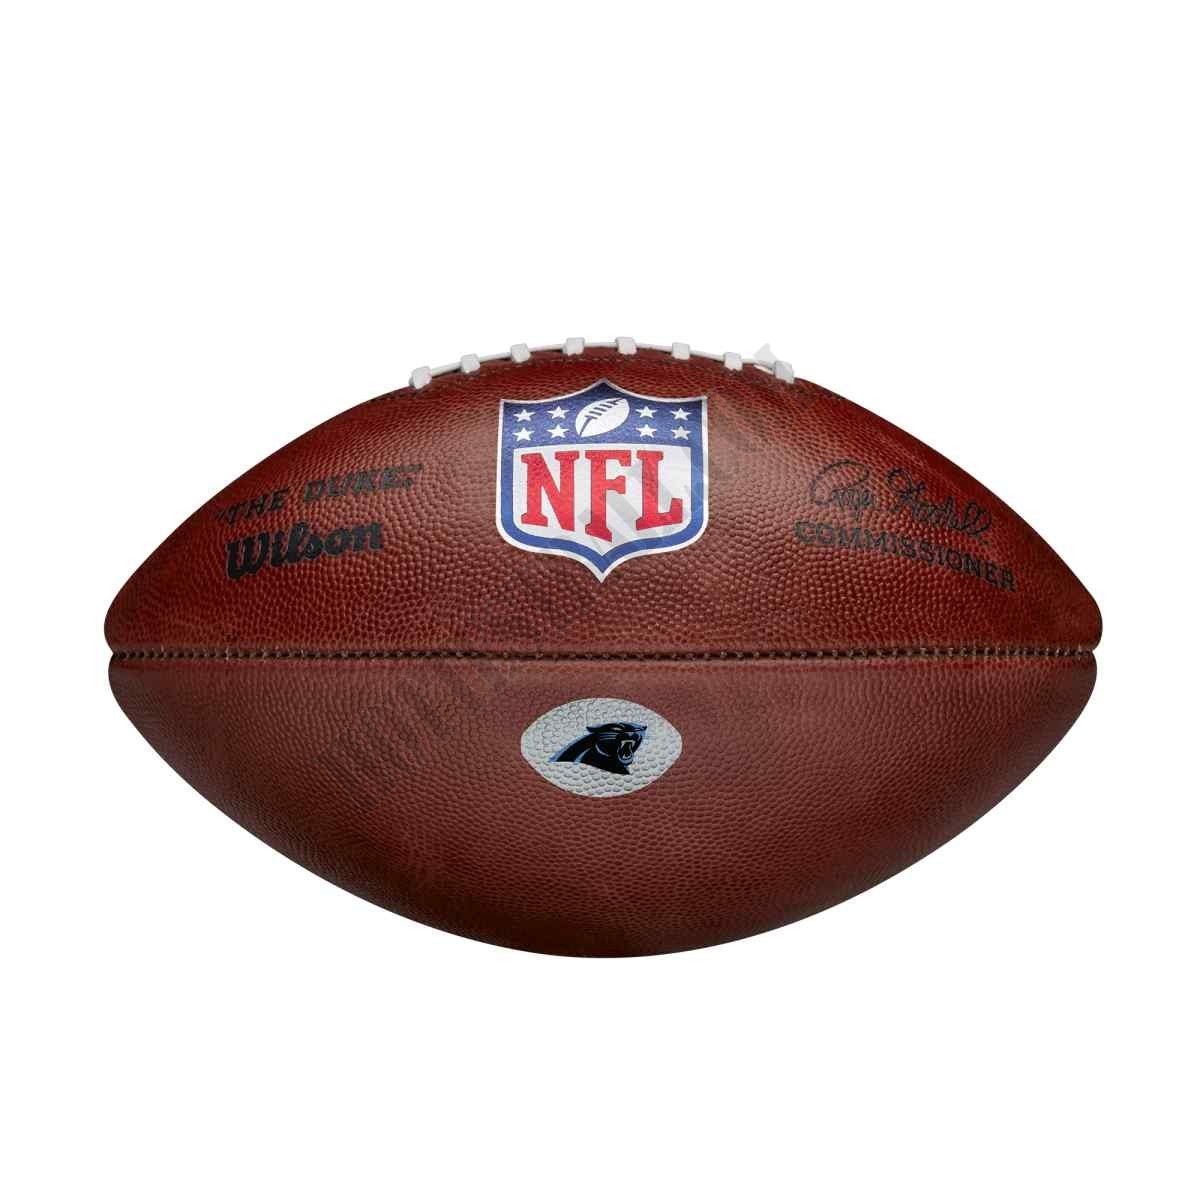 The Duke Decal NFL Football - Carolina Panthers ● Wilson Promotions - The Duke Decal NFL Football - Carolina Panthers ● Wilson Promotions